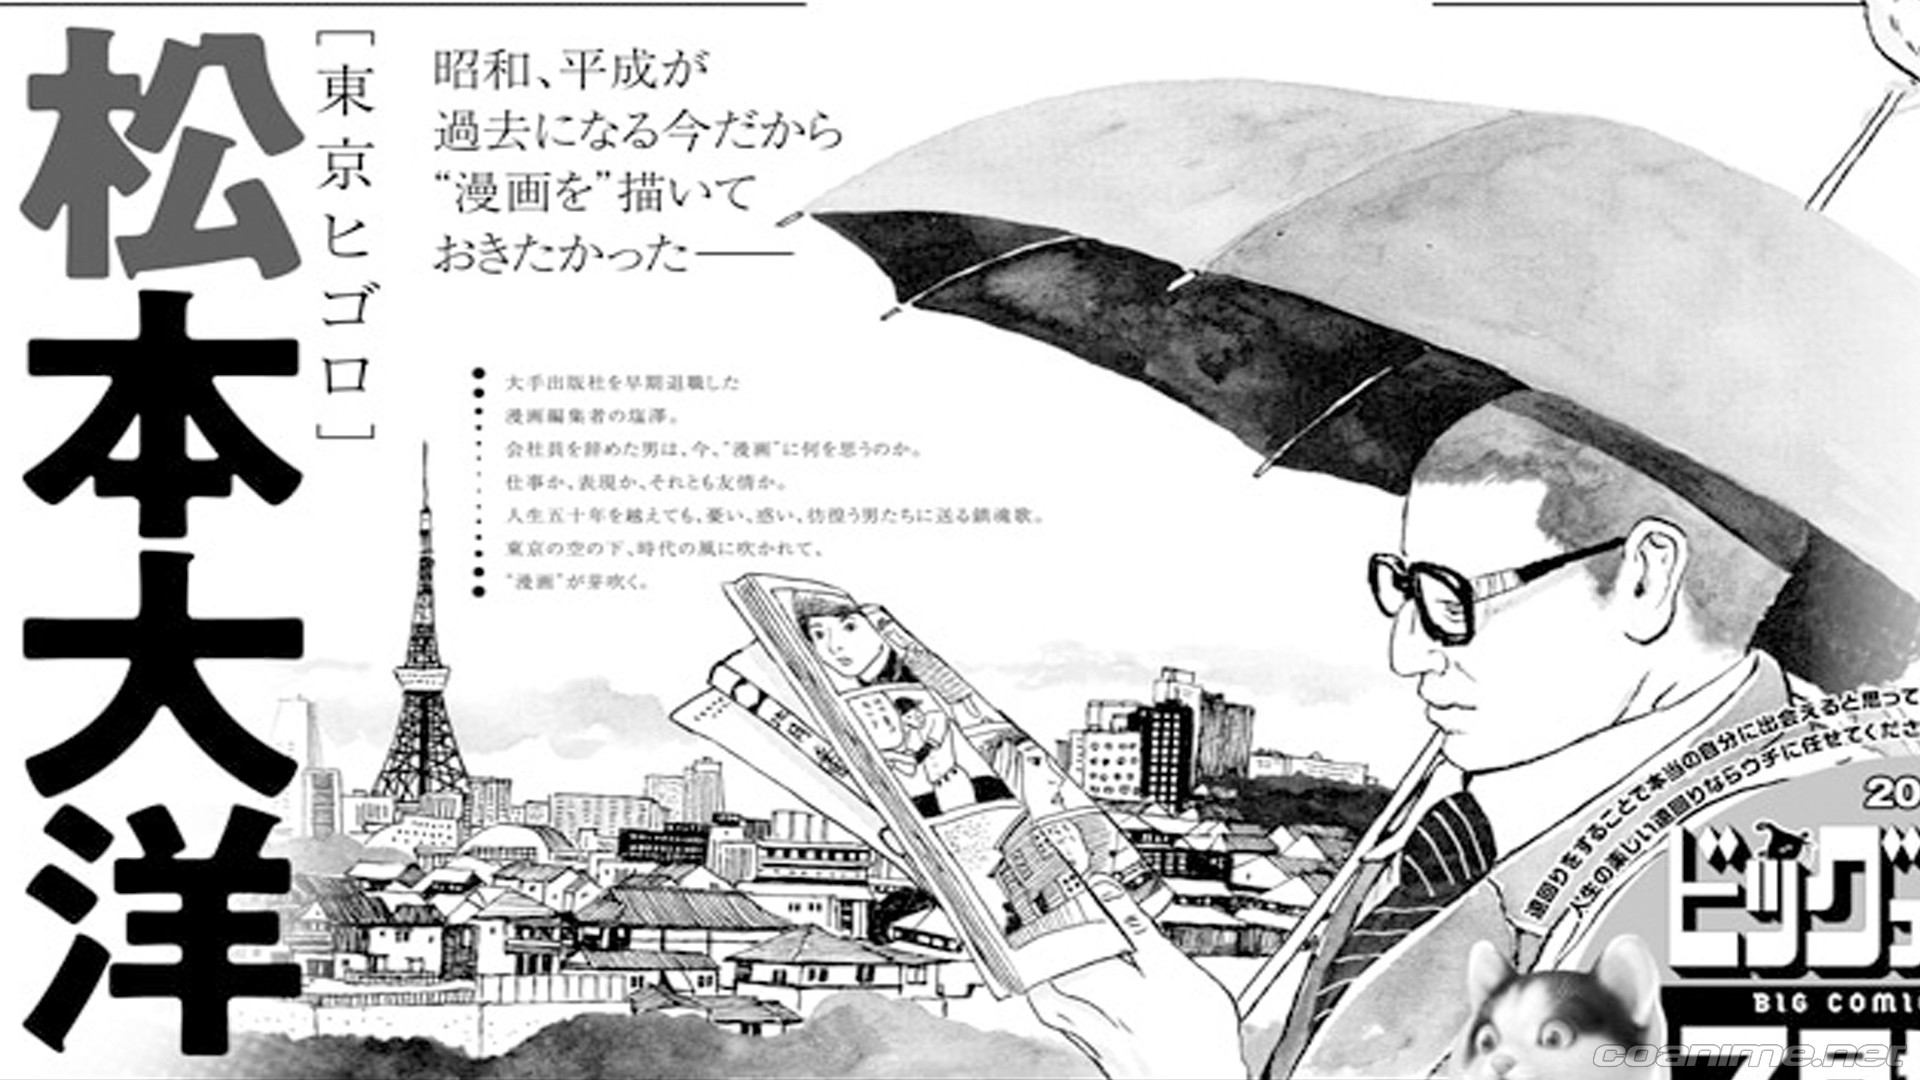 En junio se lanzará un nuevo manga de Taiyo Matsumoto - Coanime.net